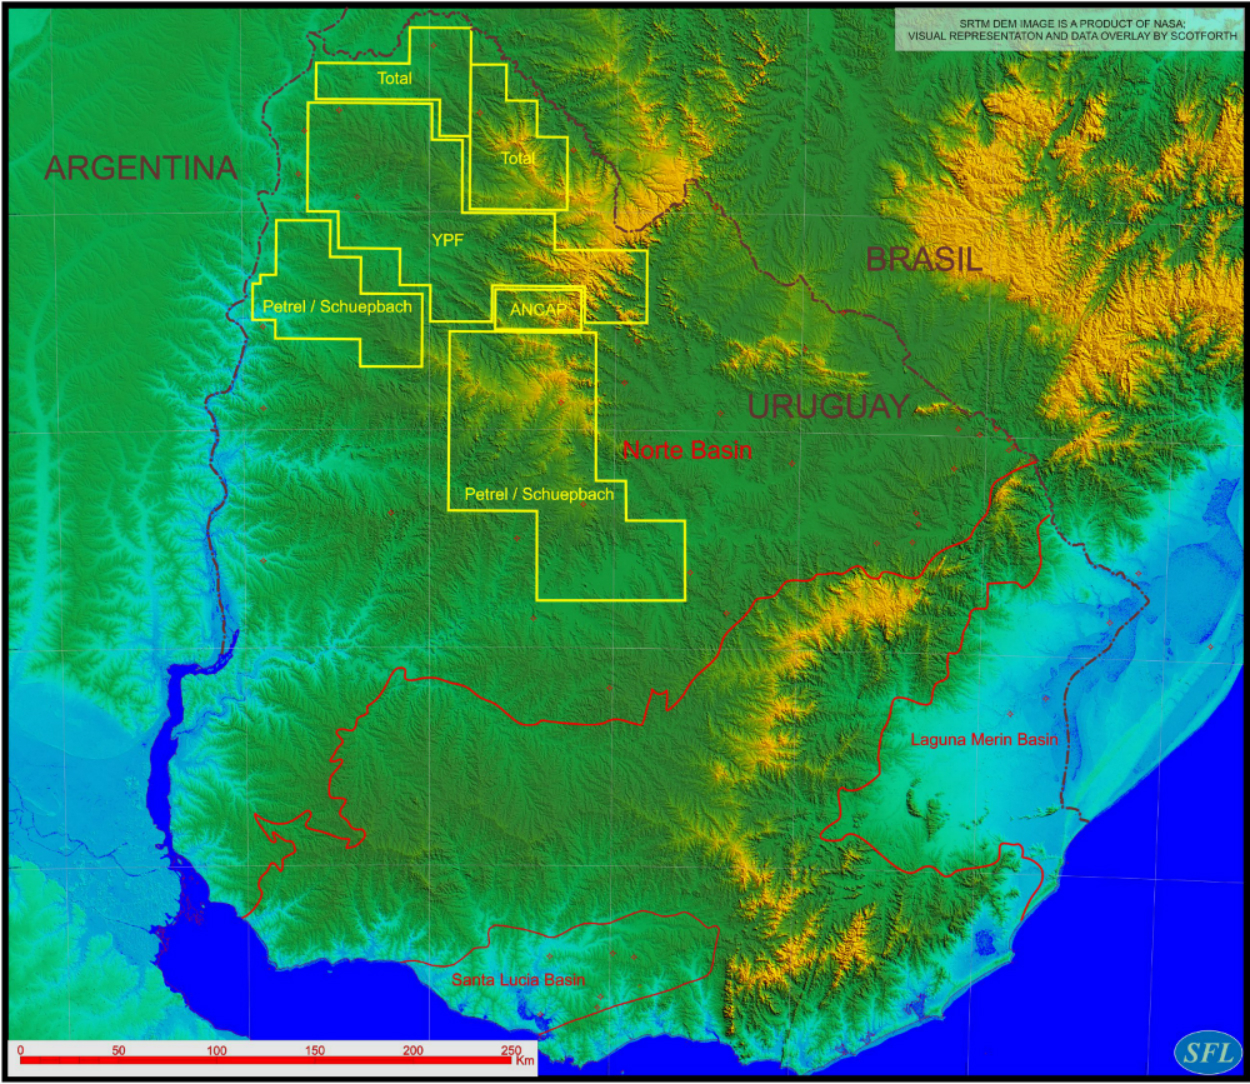 URUGUAY: Oil and Gas in the Norte Basin?